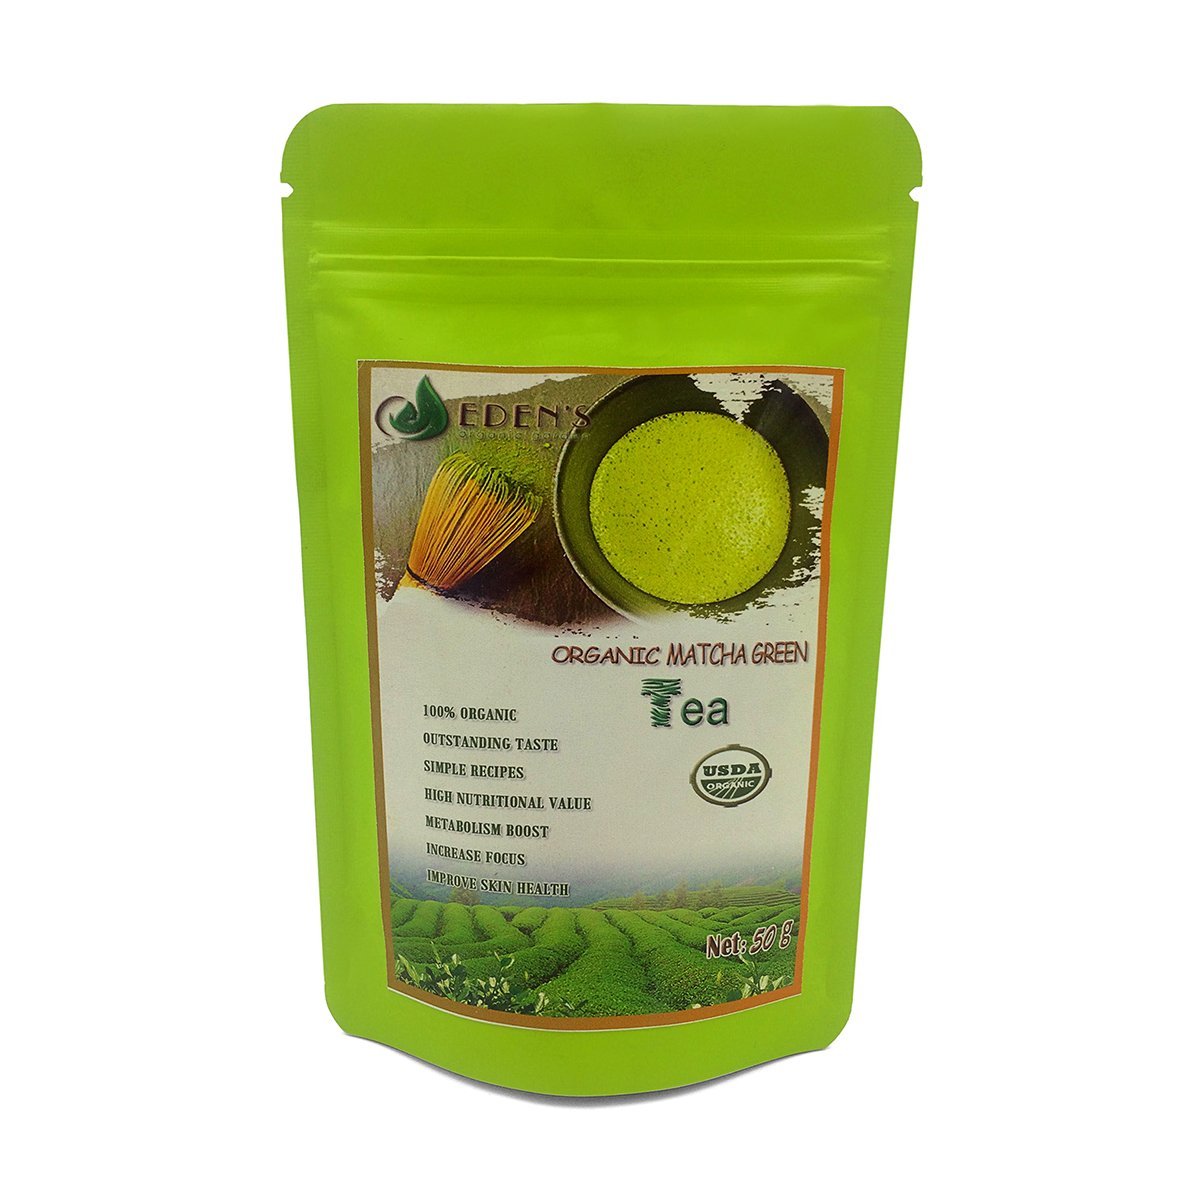 Eden’s Matcha Green Tea Powder – Organic Ceremonial Grade Japanese Matcha Net 50g (1.76 oz.) | Premium Green Tea